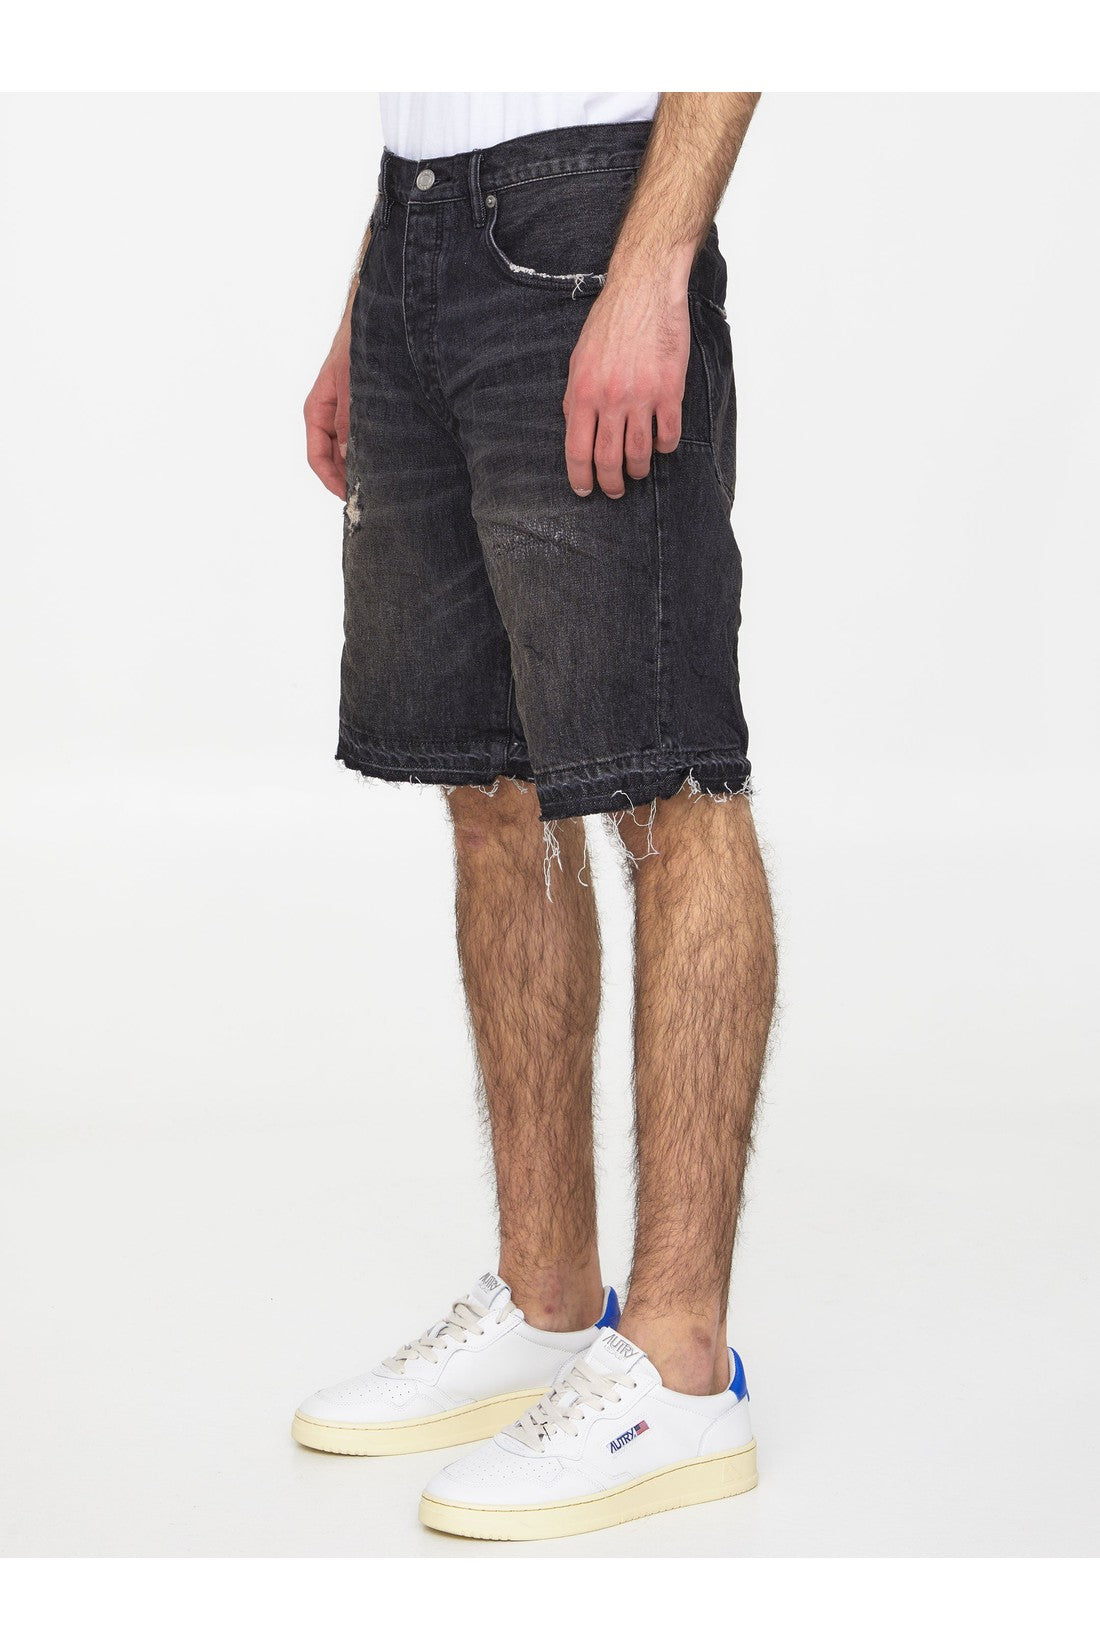 Black denim bermuda shorts